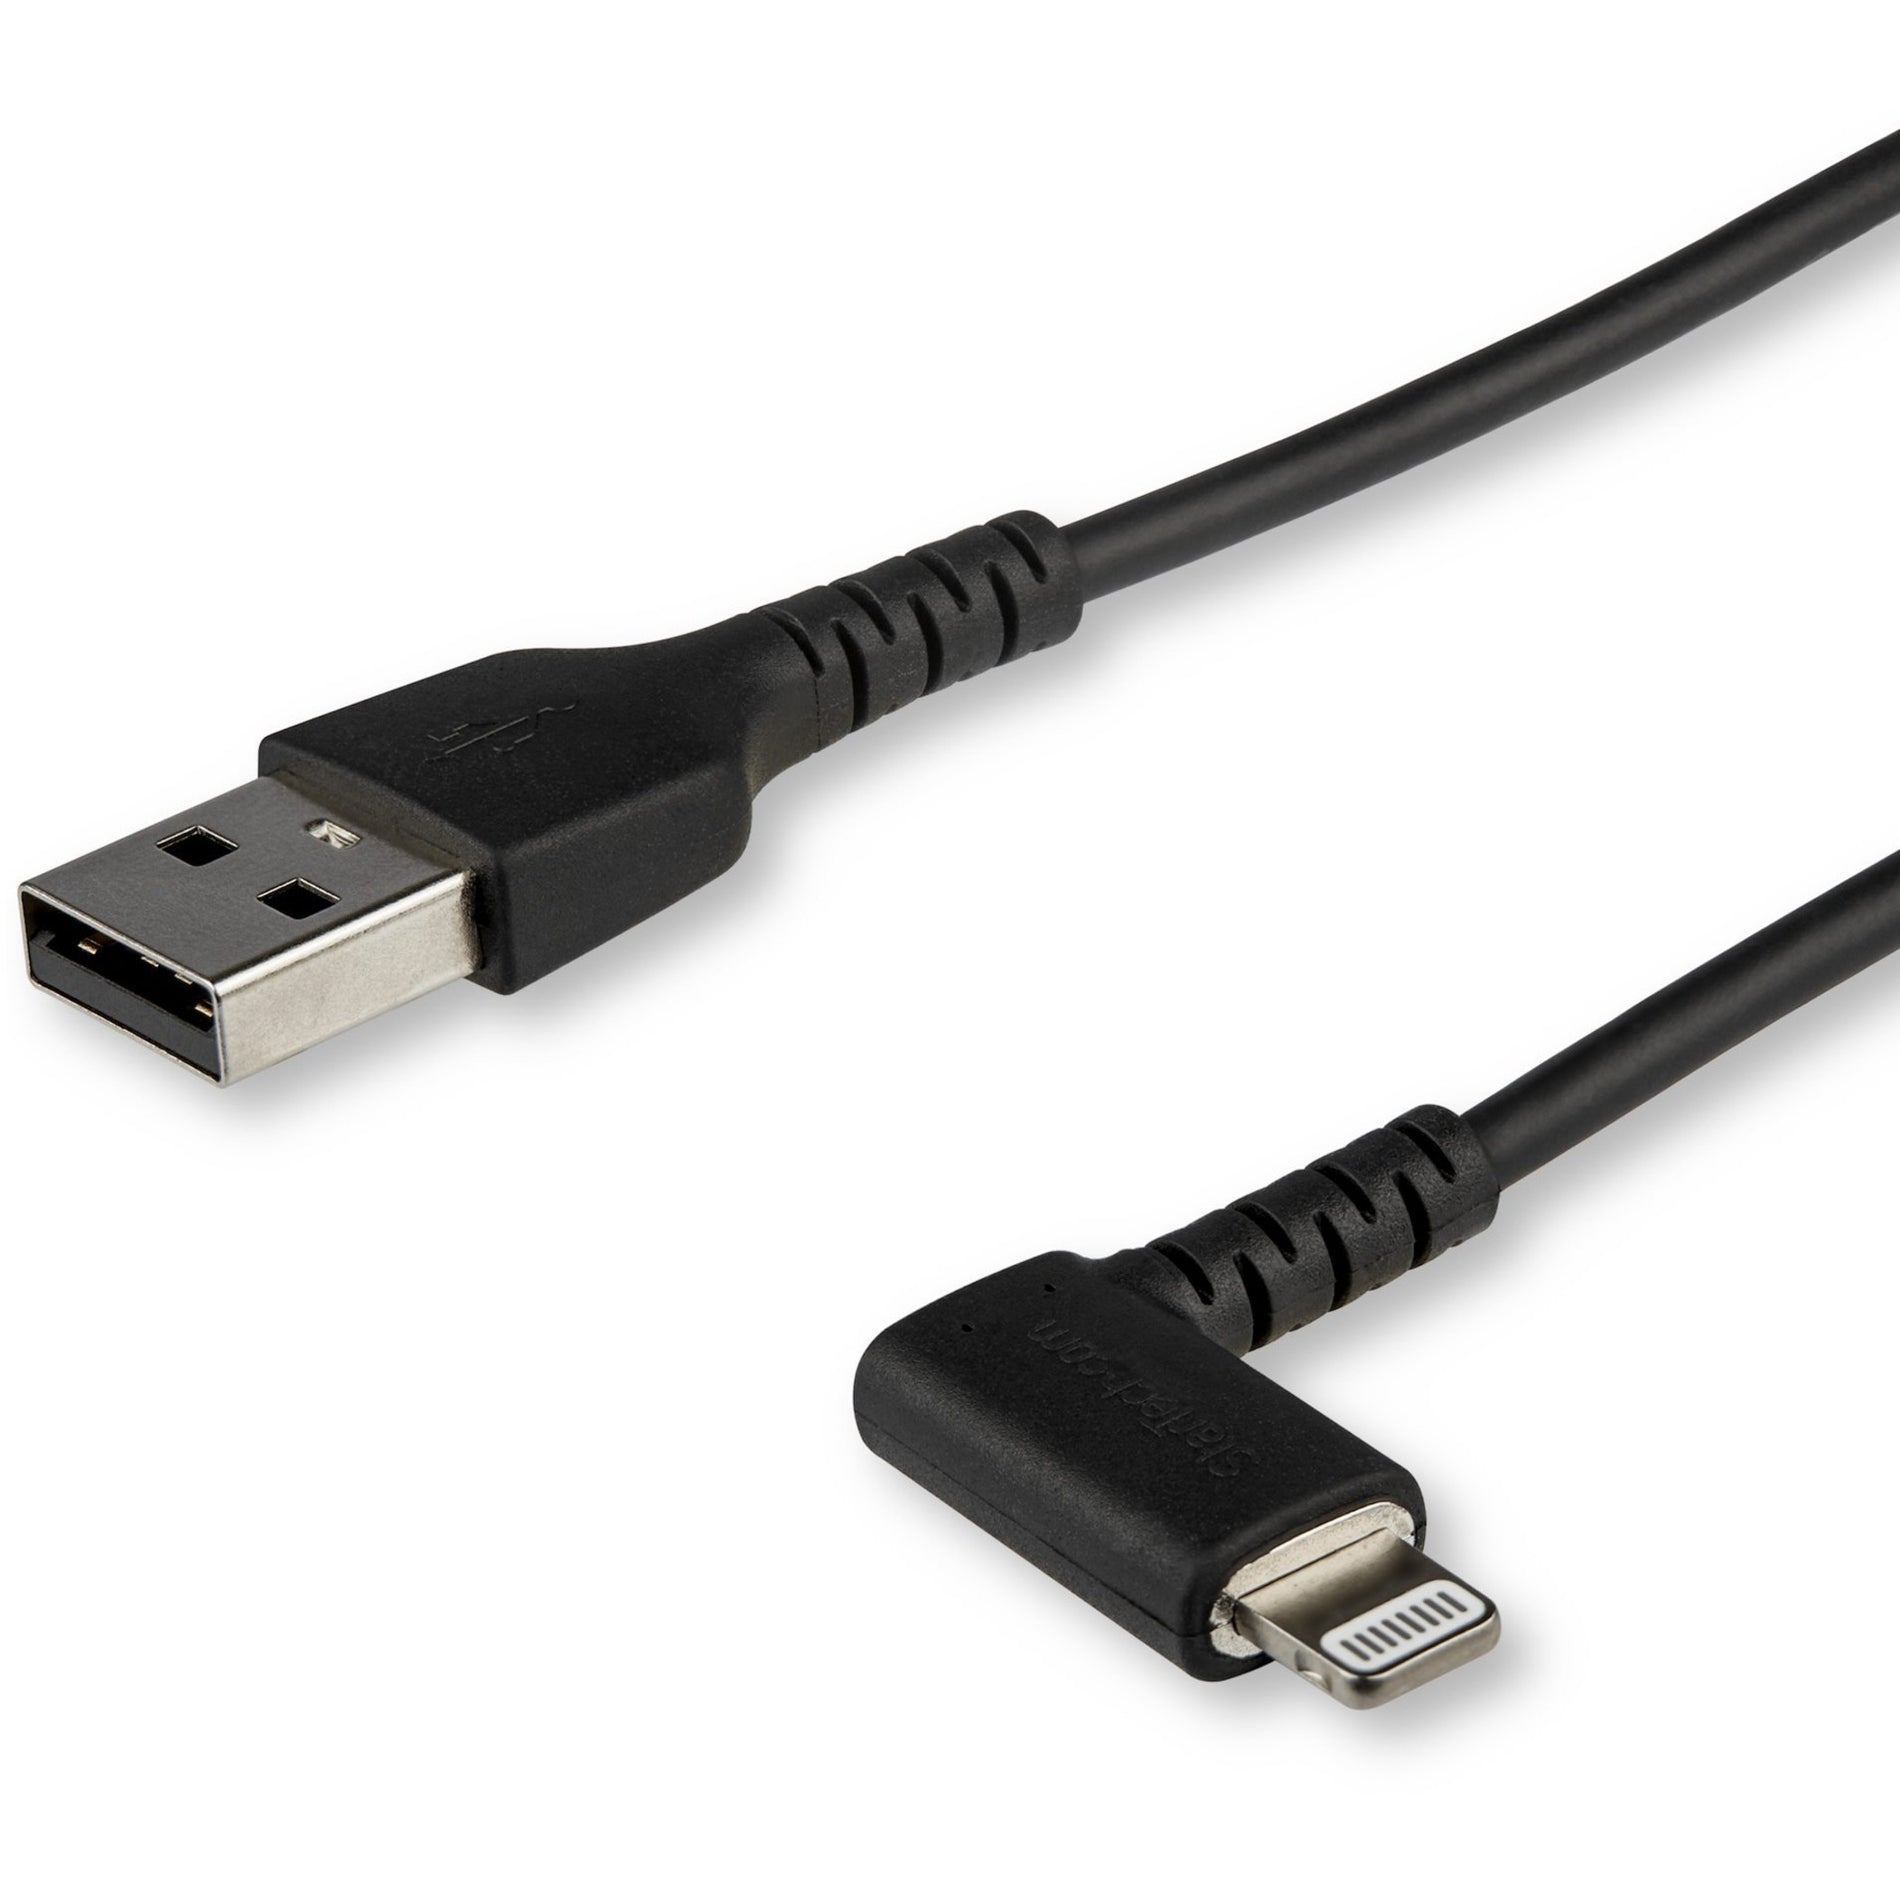 StarTech.com RUSBLTMM1MBR 1m Lightning Cable, Heavy Duty MFI Certified, Black, USB to Lightning